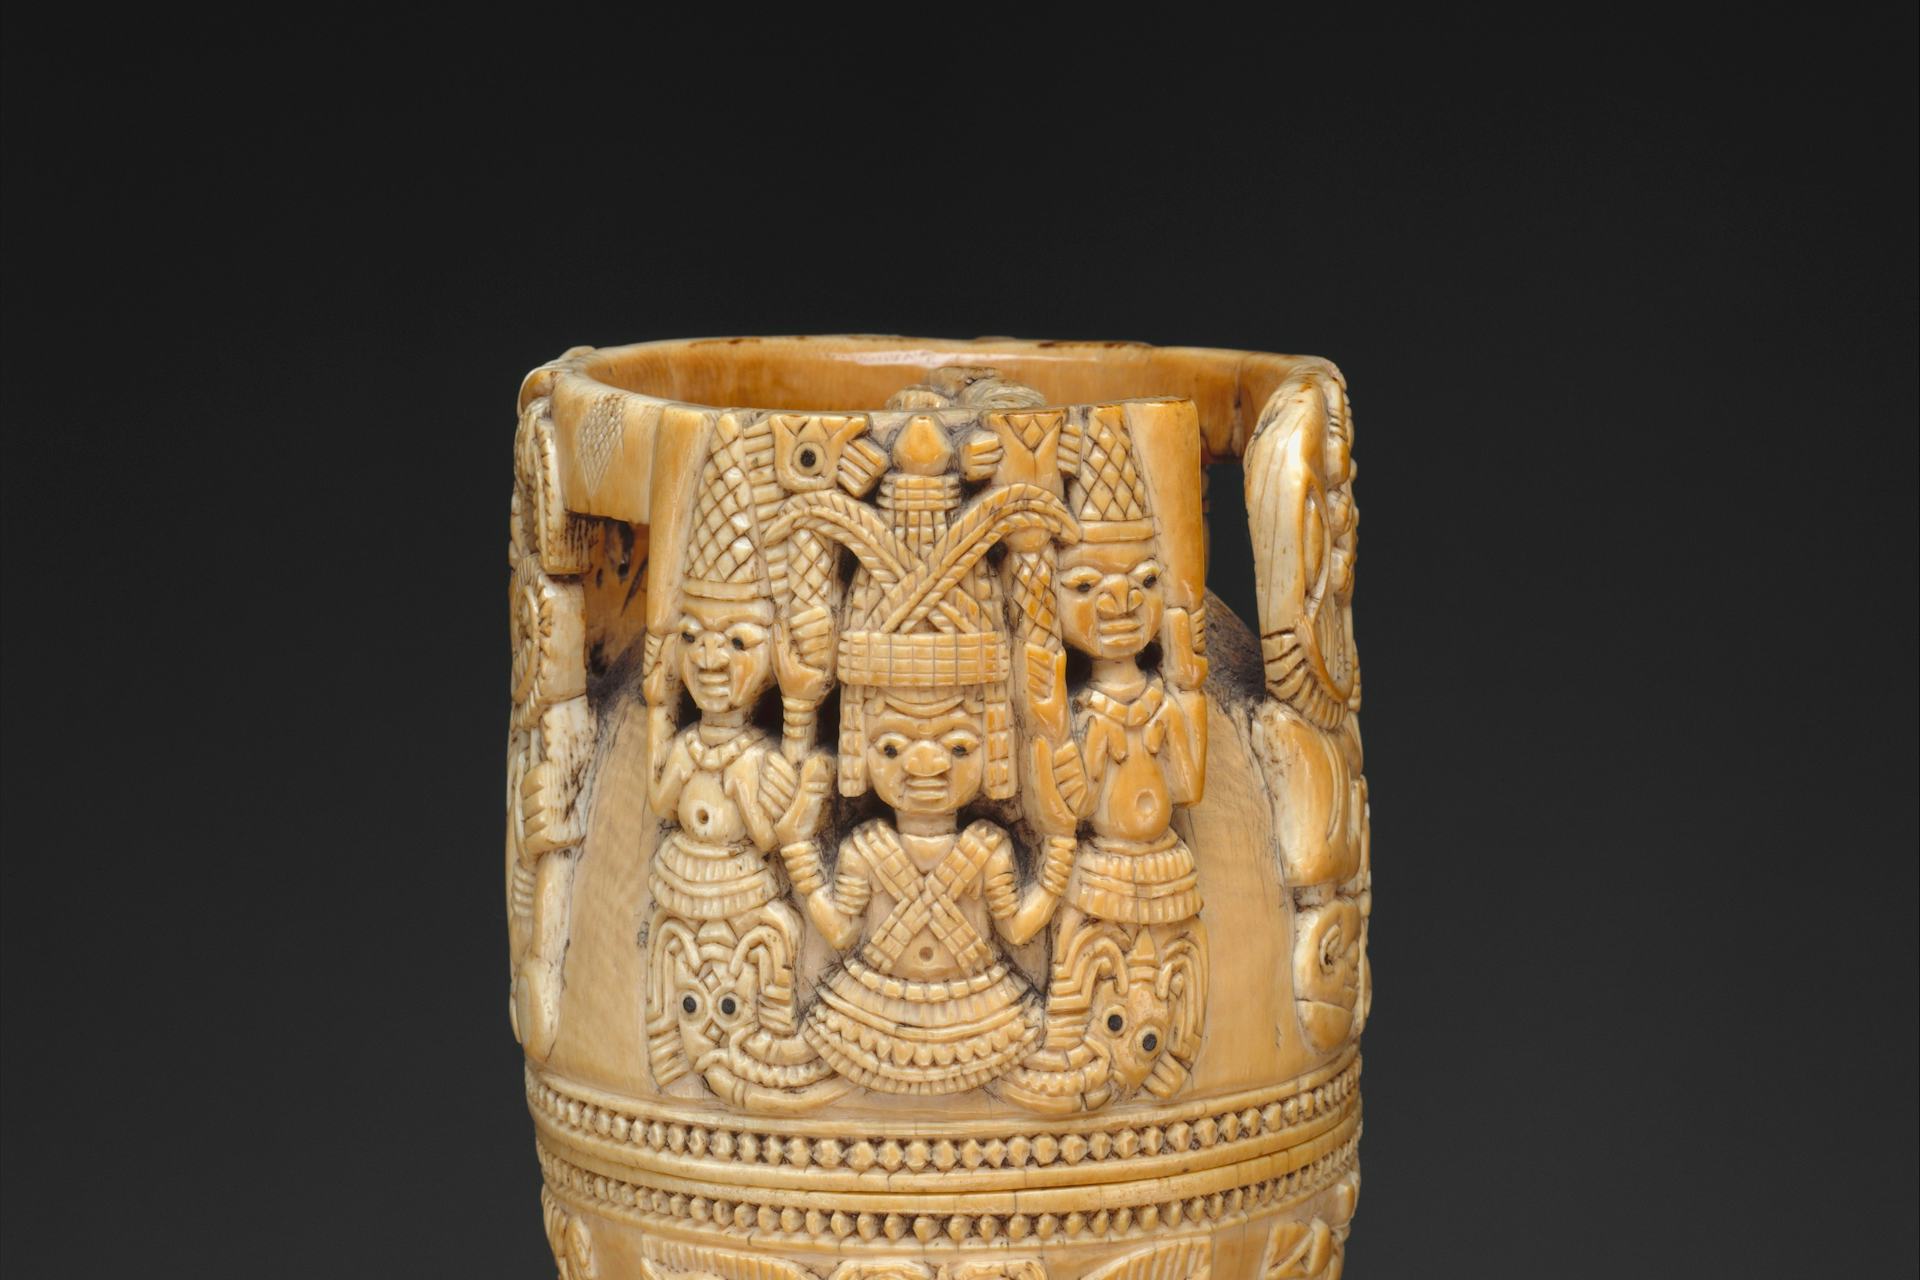 Ivory vessel by Yoruba artist (17th to 18th century).